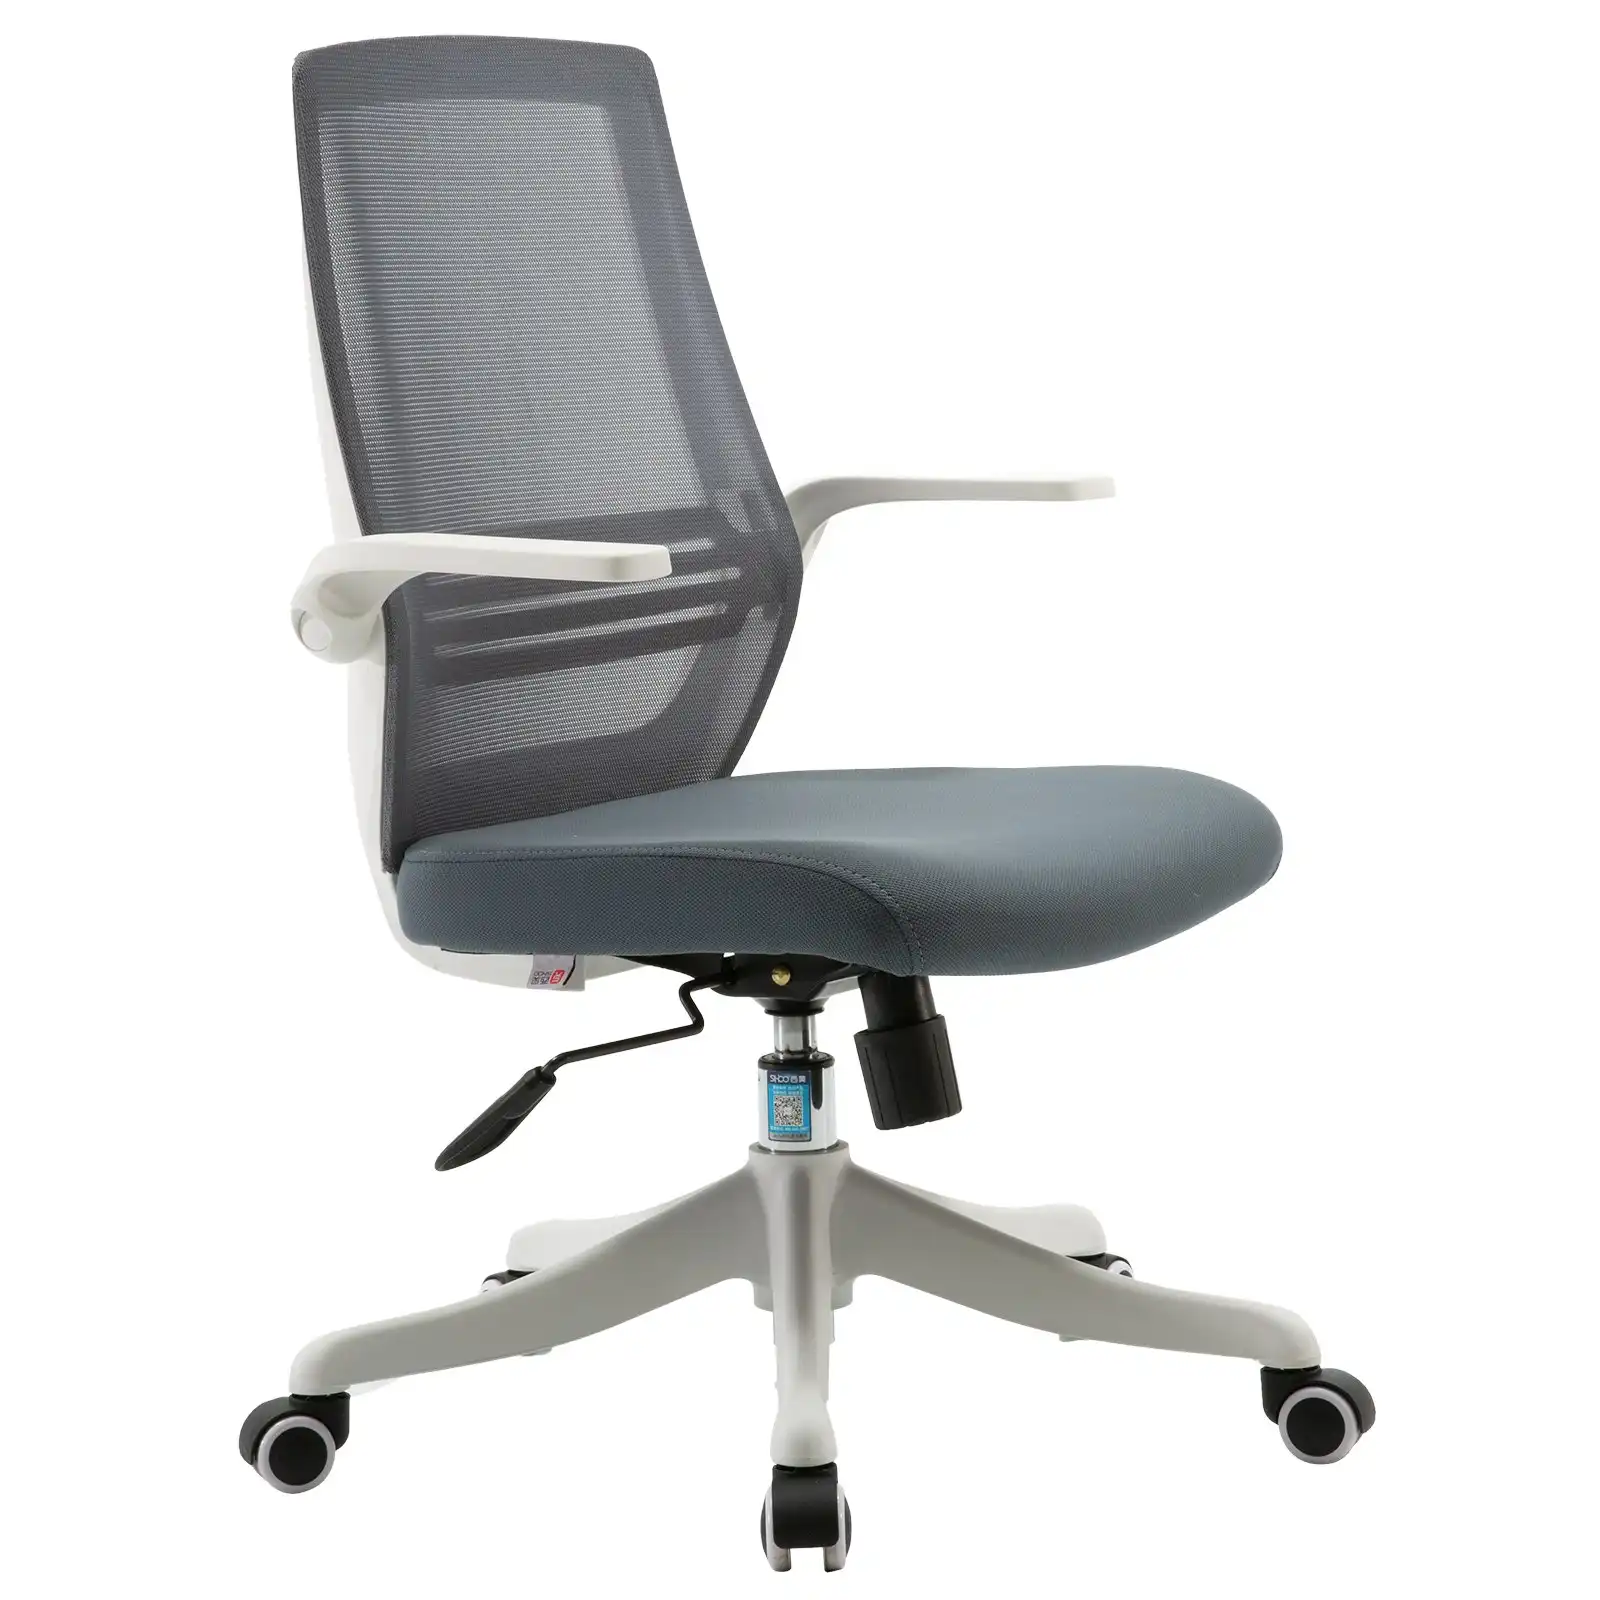 SIHOO M76 Ergonomics Home Office Chair Meeting Room Chair - Grey